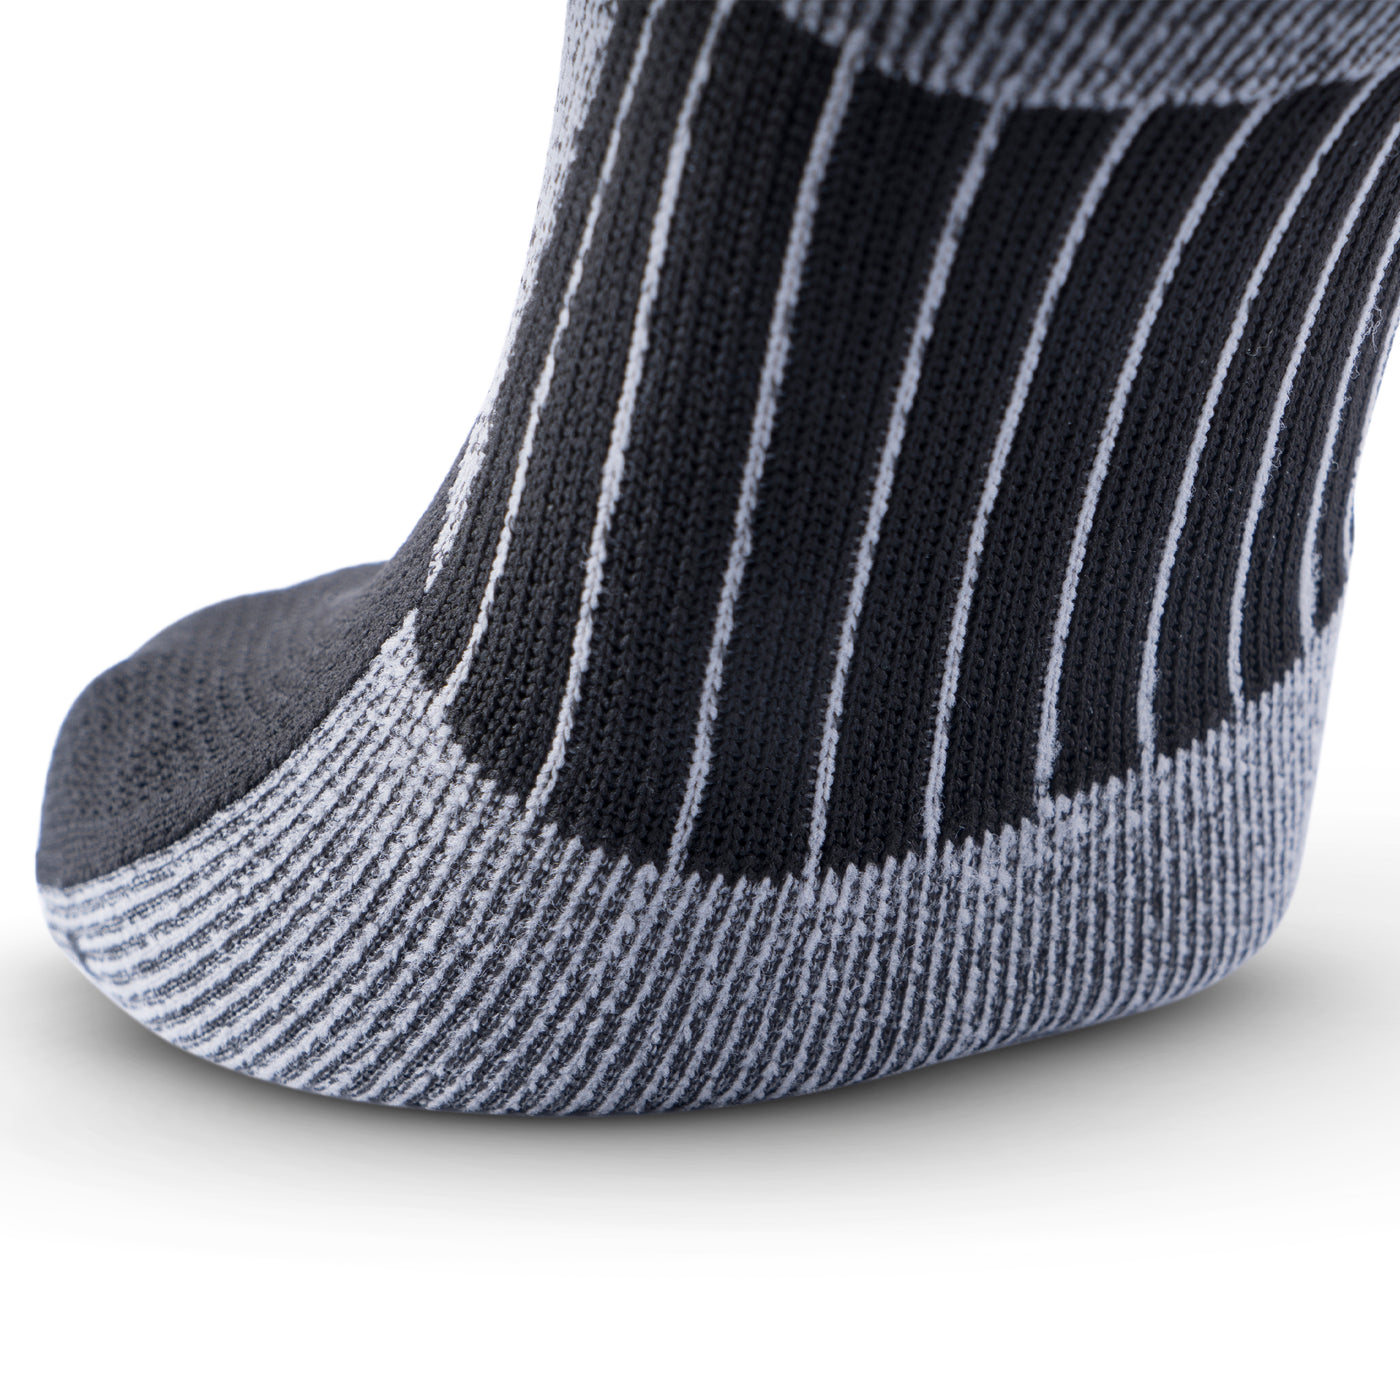 No-Show Running Socks - Black/Gray (2 Pair Pack)